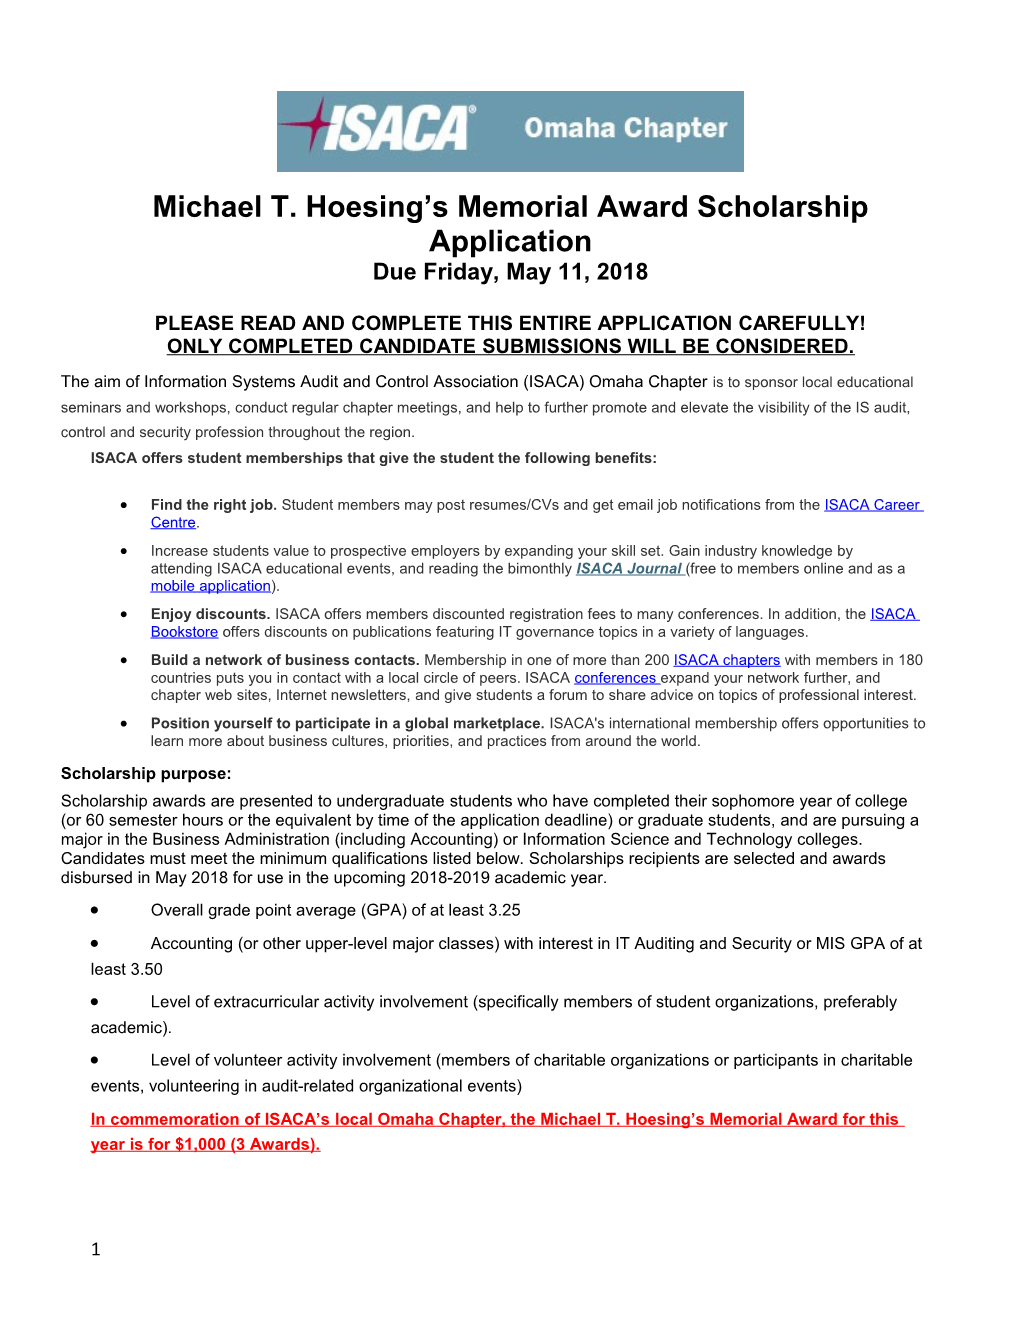 Michael T. Hoesing S Memorial Award Scholarship Application